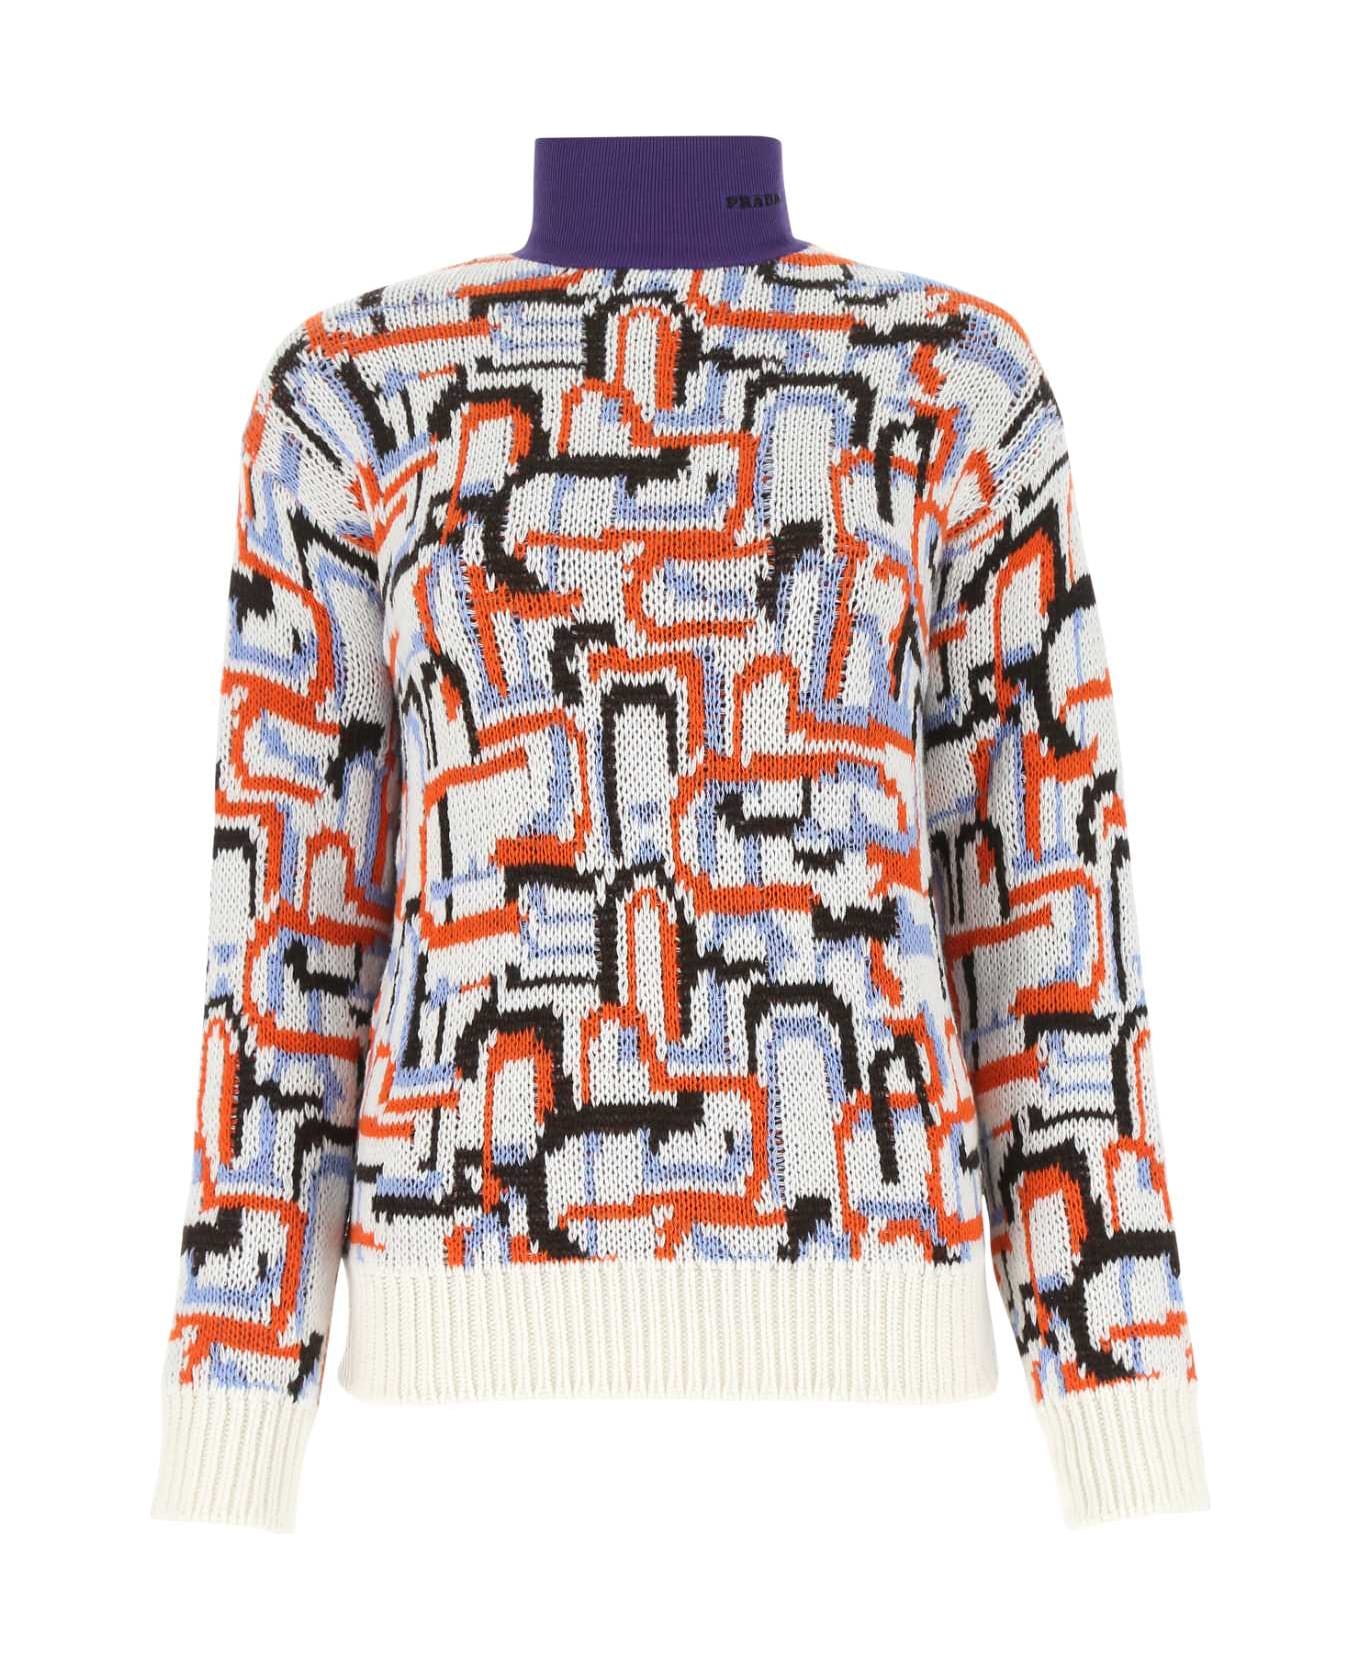 Prada Embroidered Wool Blend Sweater - F0049